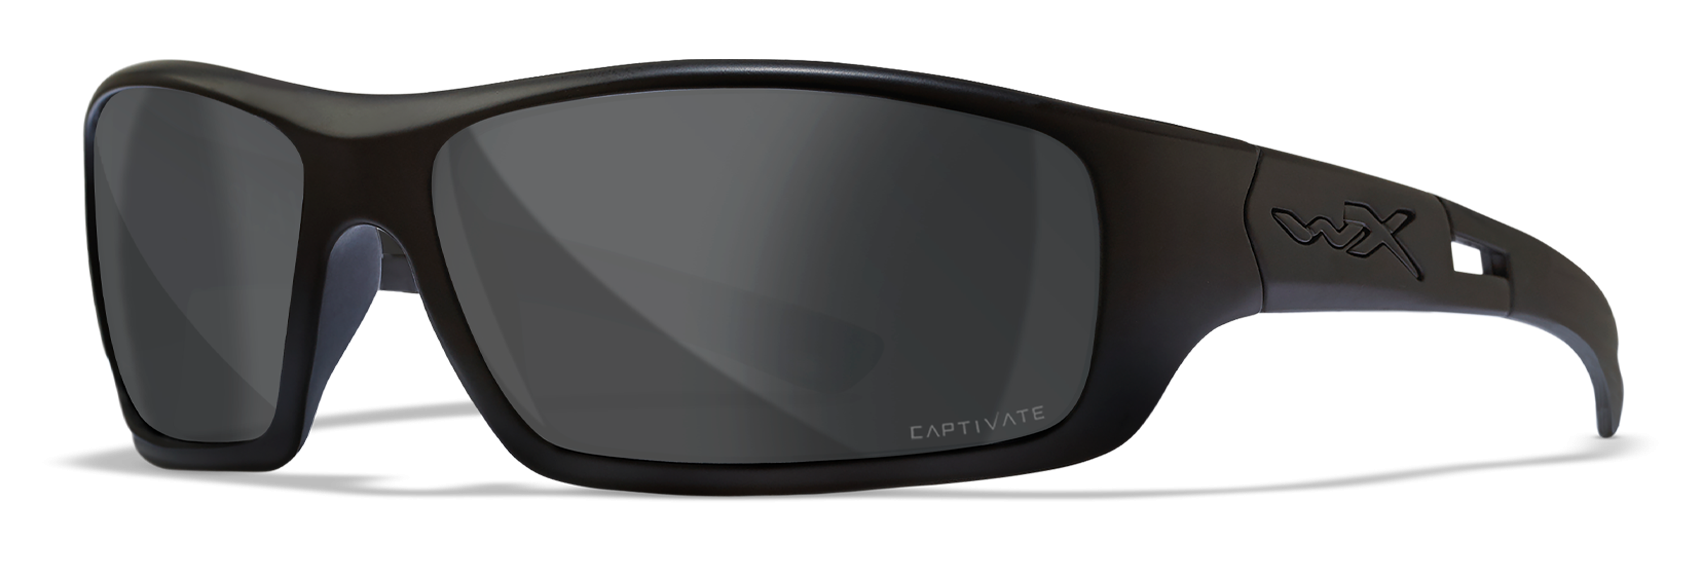 Wiley X Slay Sunglasses